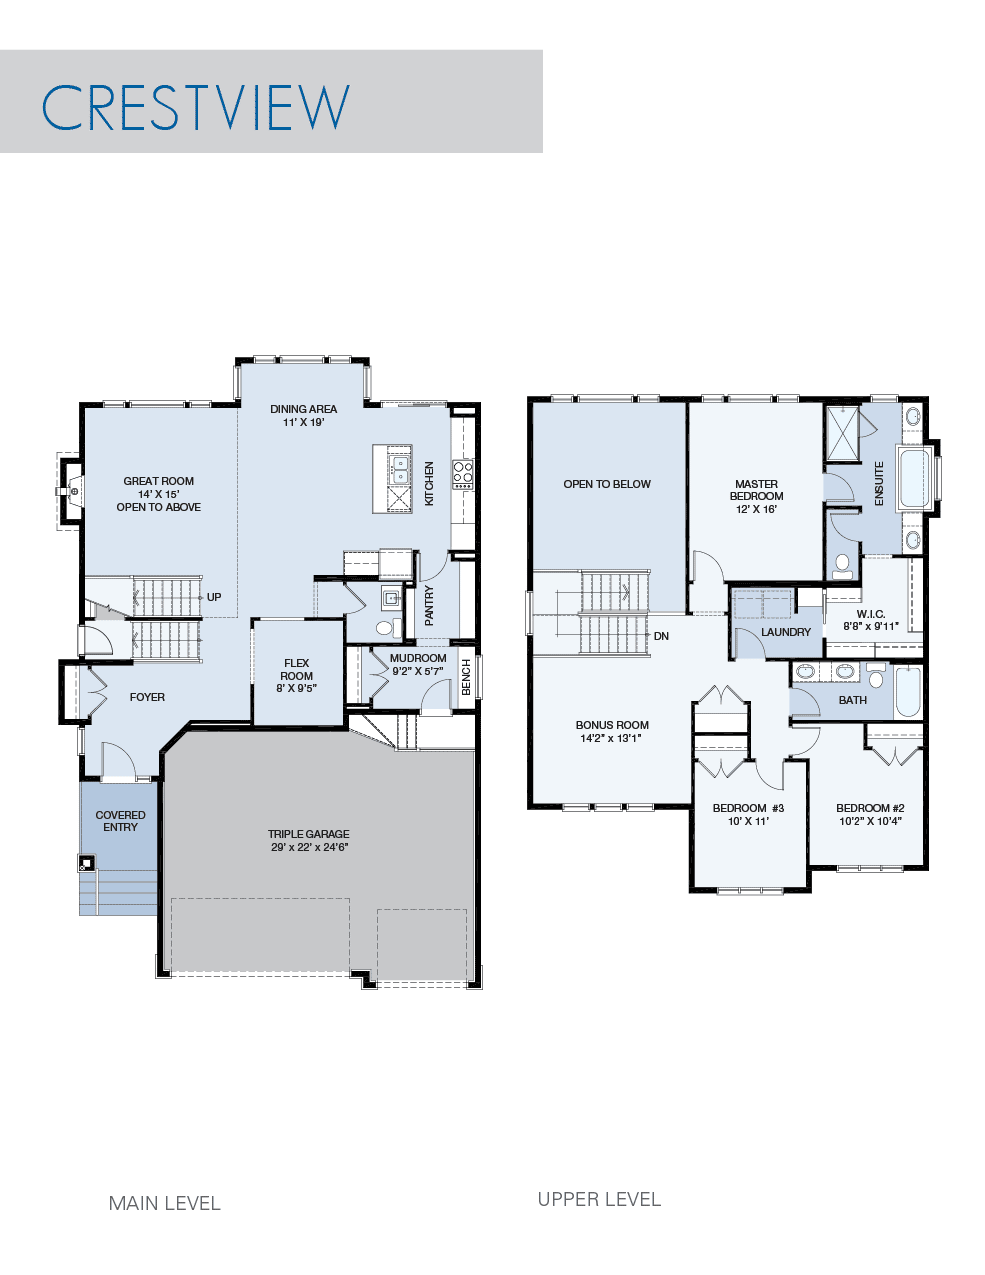 Crestview floorplan